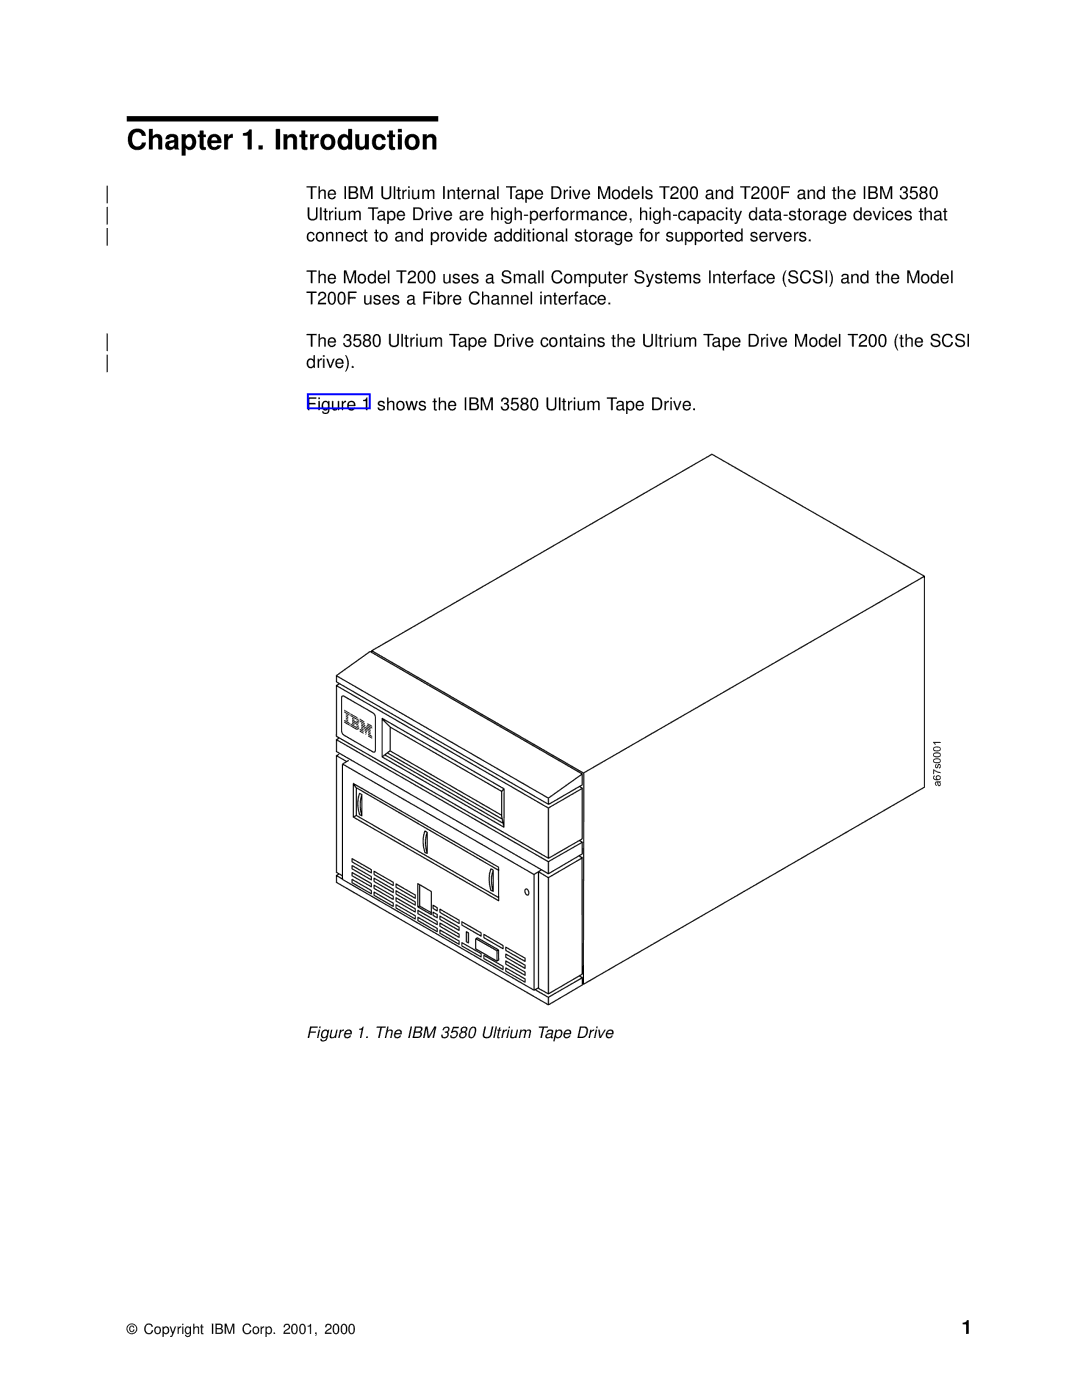 IBM T200F manual Introduction, IBM 3580 Ultrium Tape Drive 